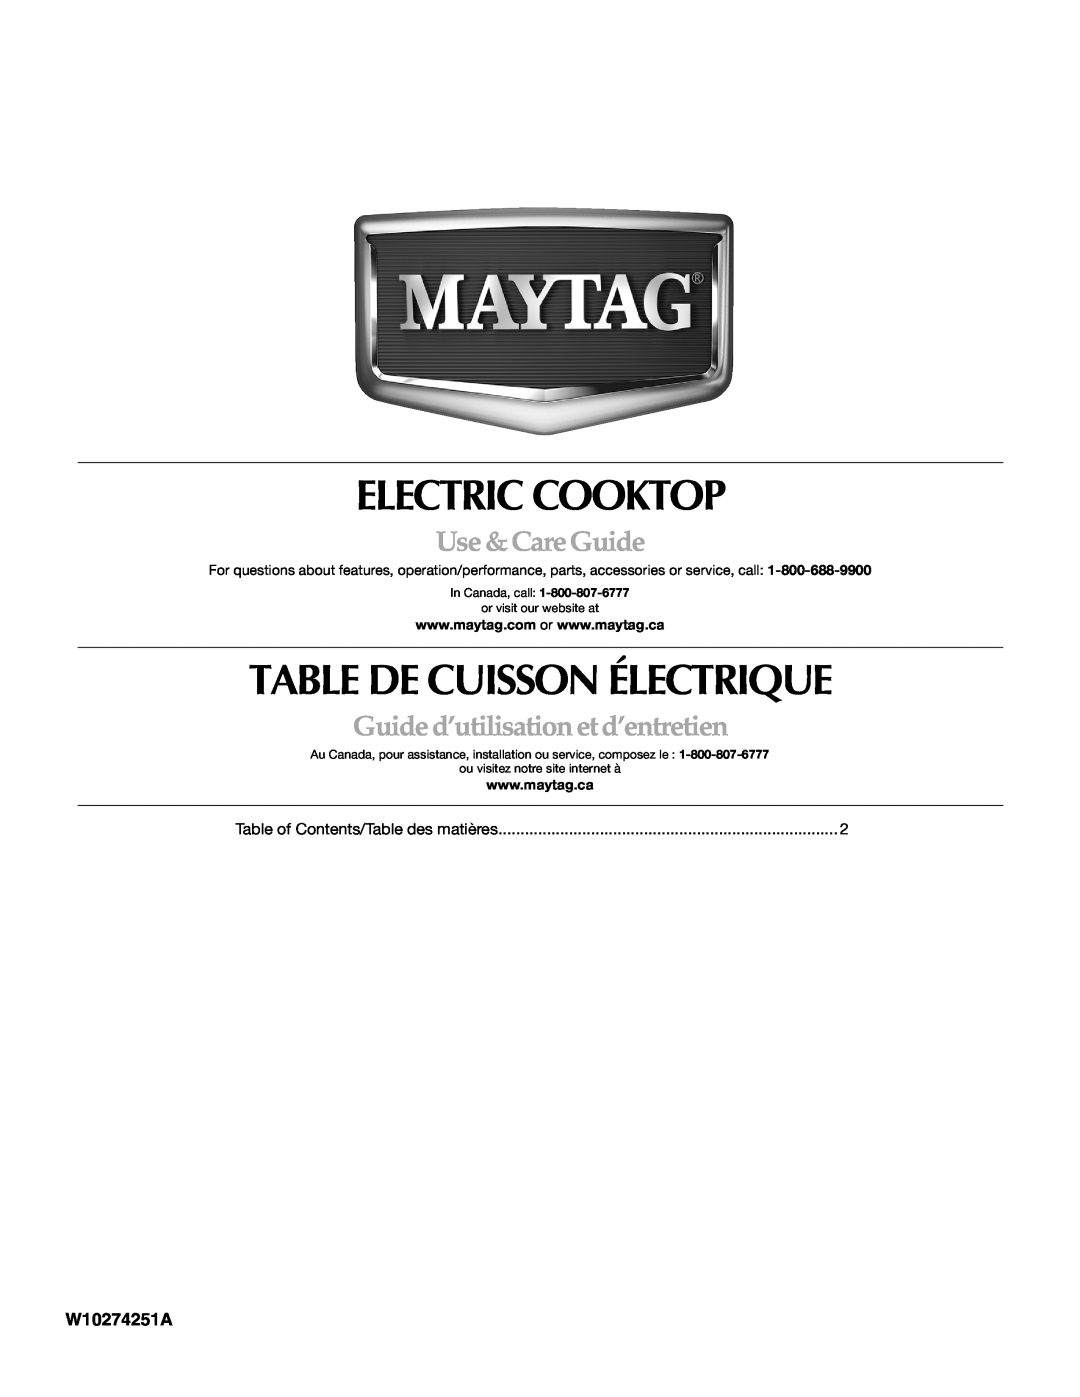 Maytag W10274251A manual Electric Cooktop, Table De Cuisson Électrique, Use &CareGuide, Guided’utilisationetd’entretien 